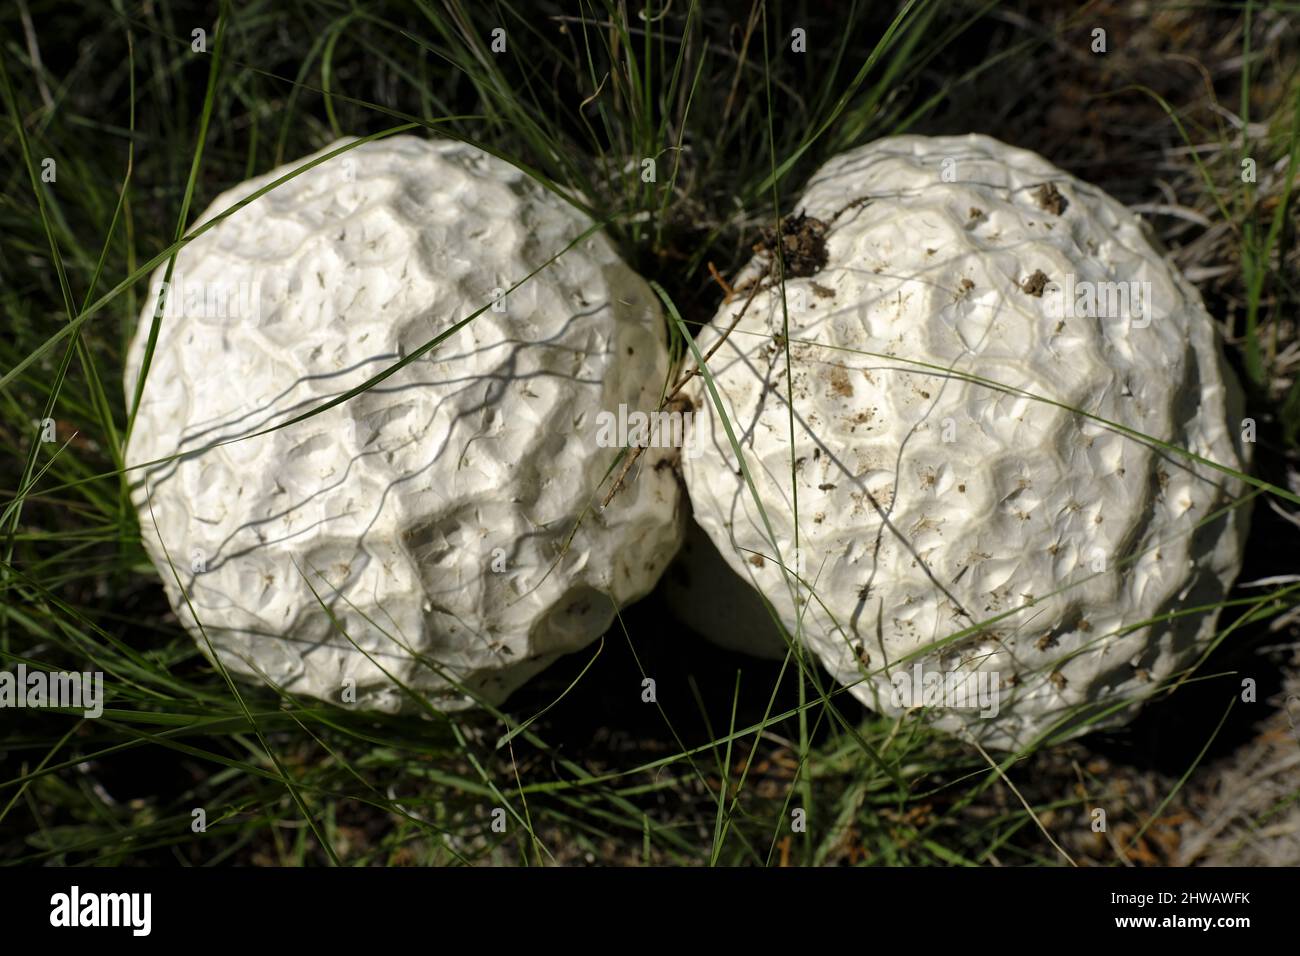 giant white mushroom globe fungus Stock Photo